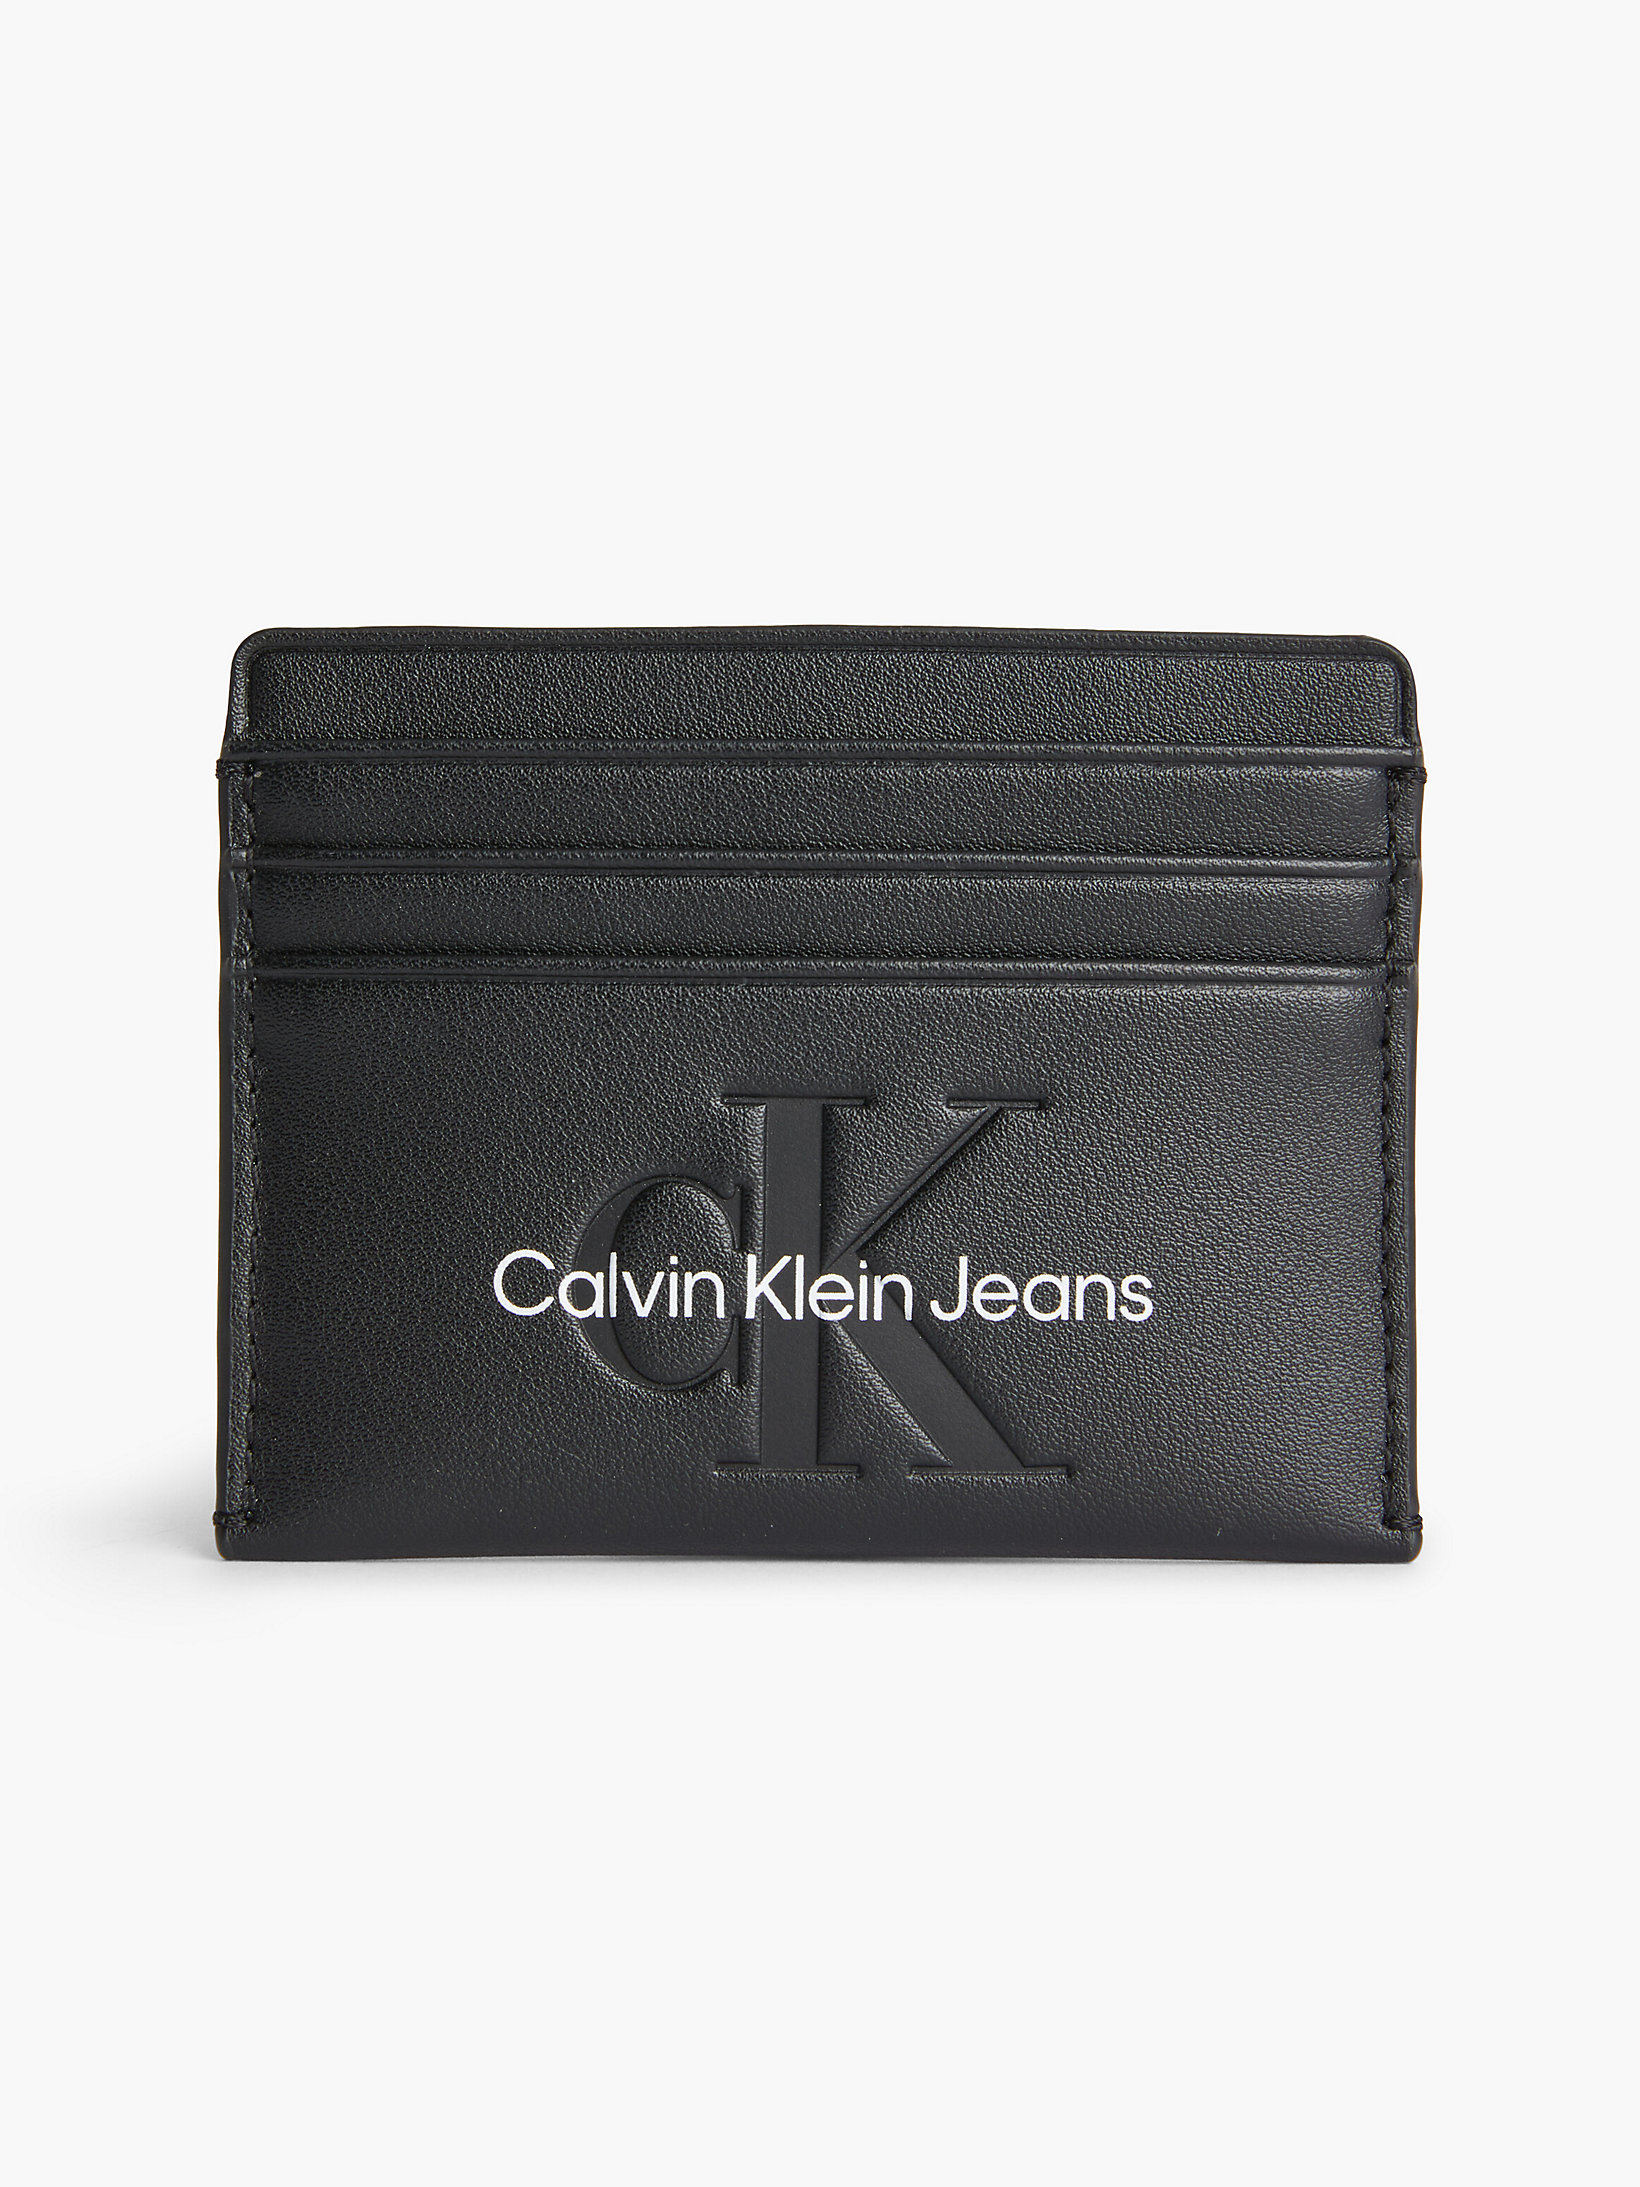 Black > Kartenetui > undefined Damen - Calvin Klein